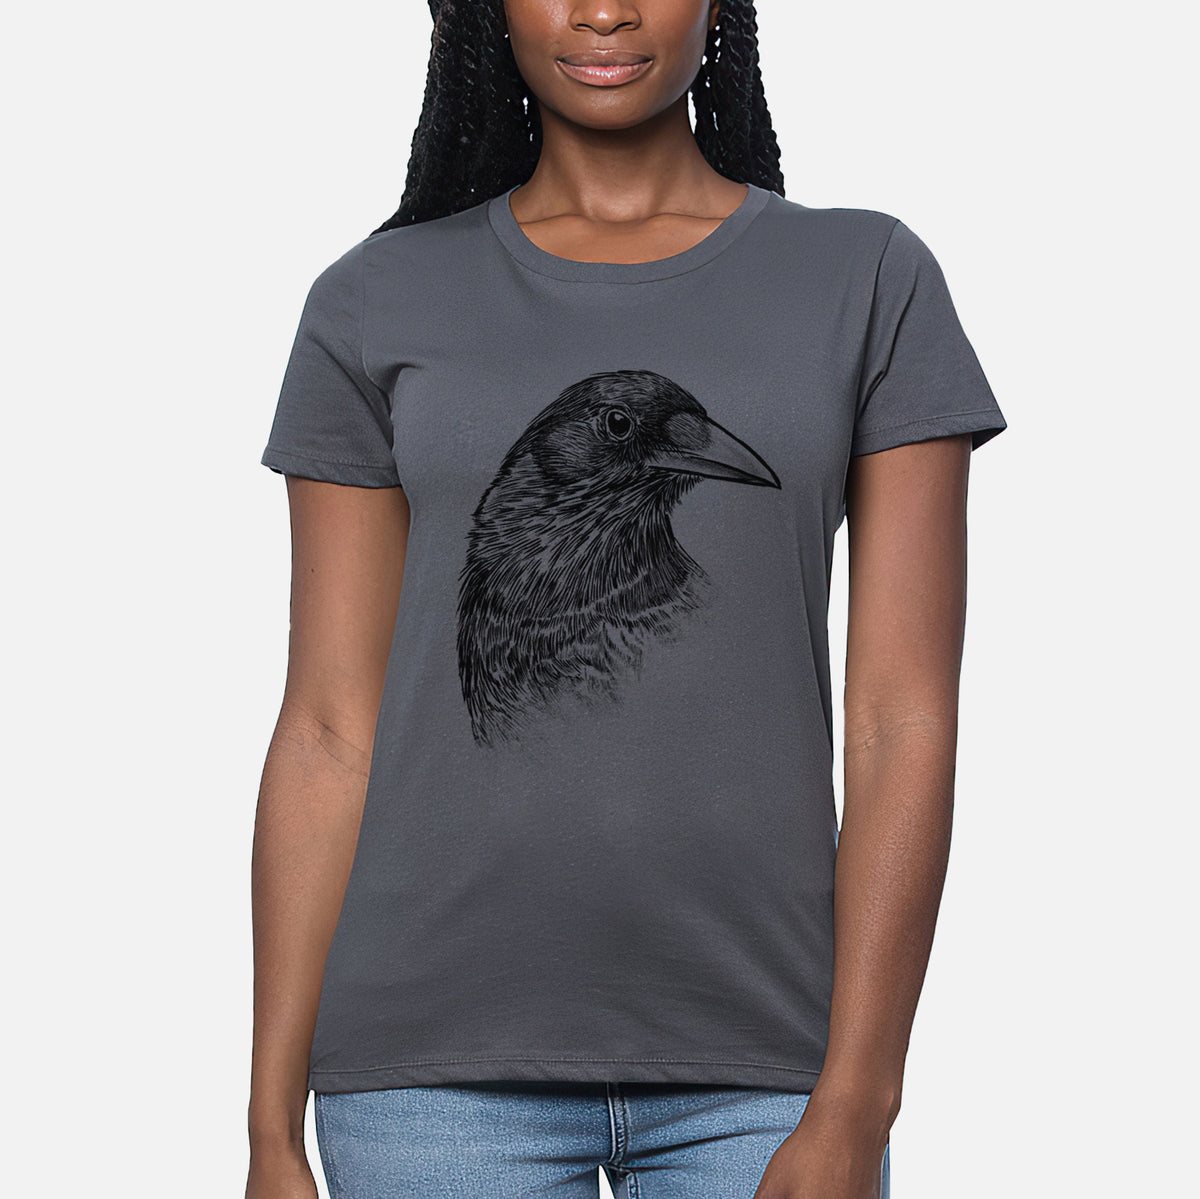 American Crow Bust - Corvus brachyrhynchos - Women&#39;s Crewneck - Made in USA - 100% Organic Cotton